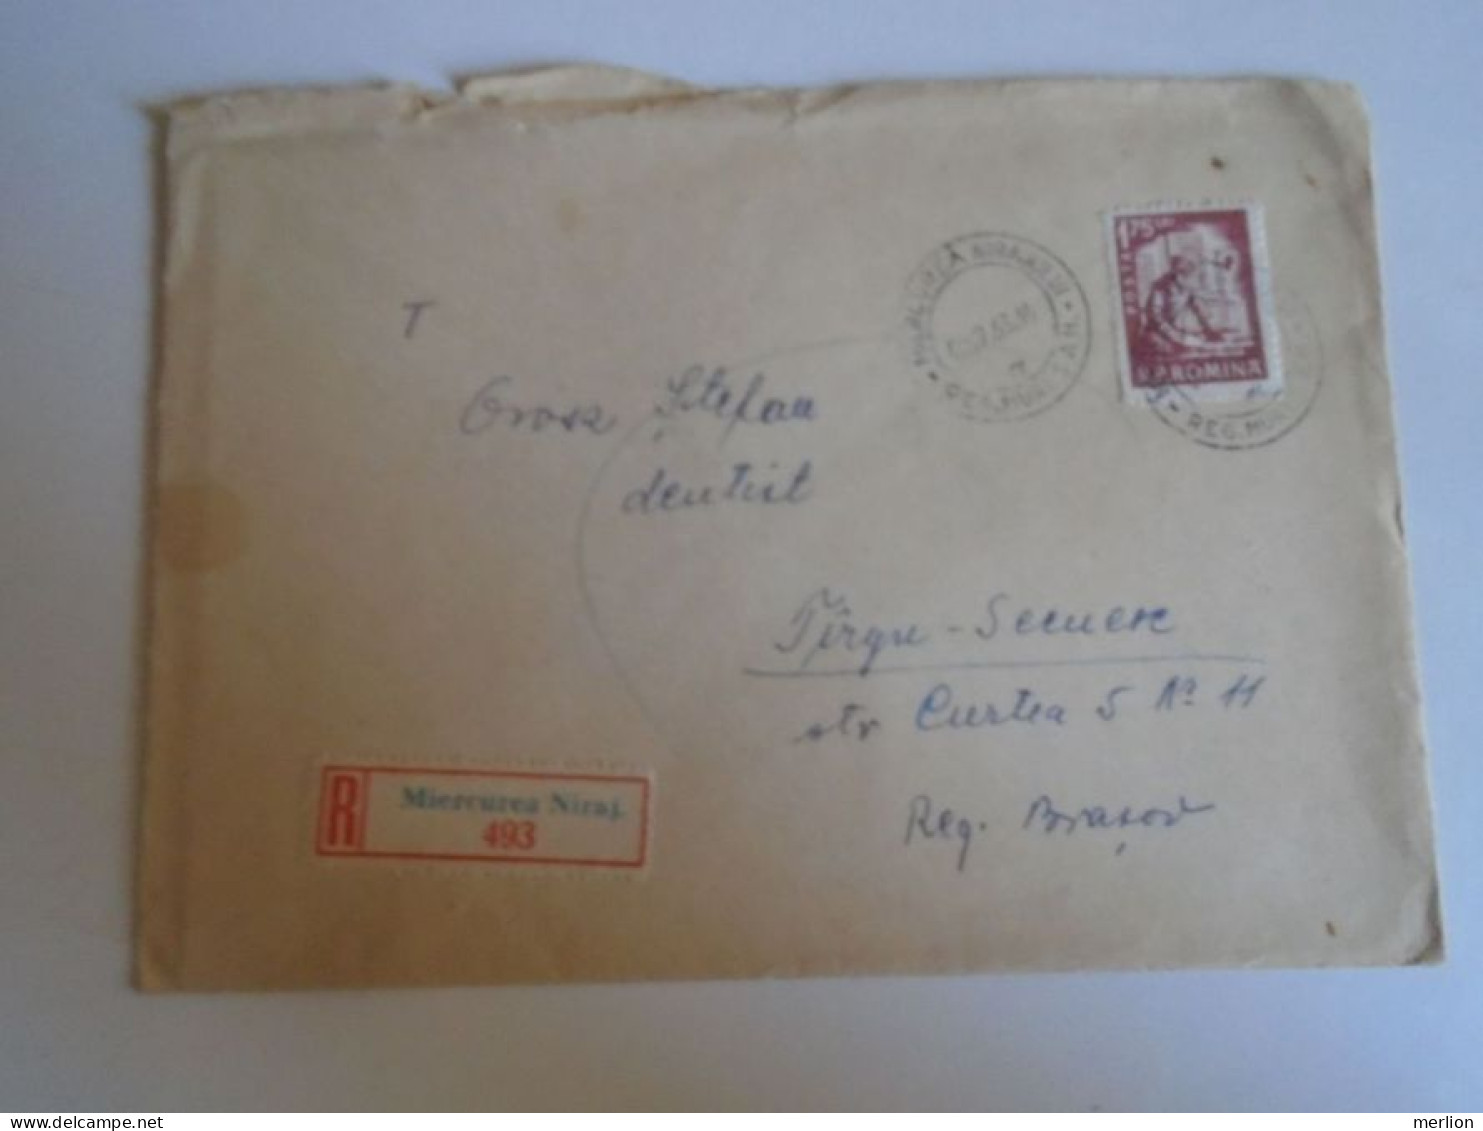 D201421  ROMANIA   Registered Cover - 1963  Miercurea Nirajului   -  To Orosz  István  Dentist  Tg. Secuesc - Covers & Documents